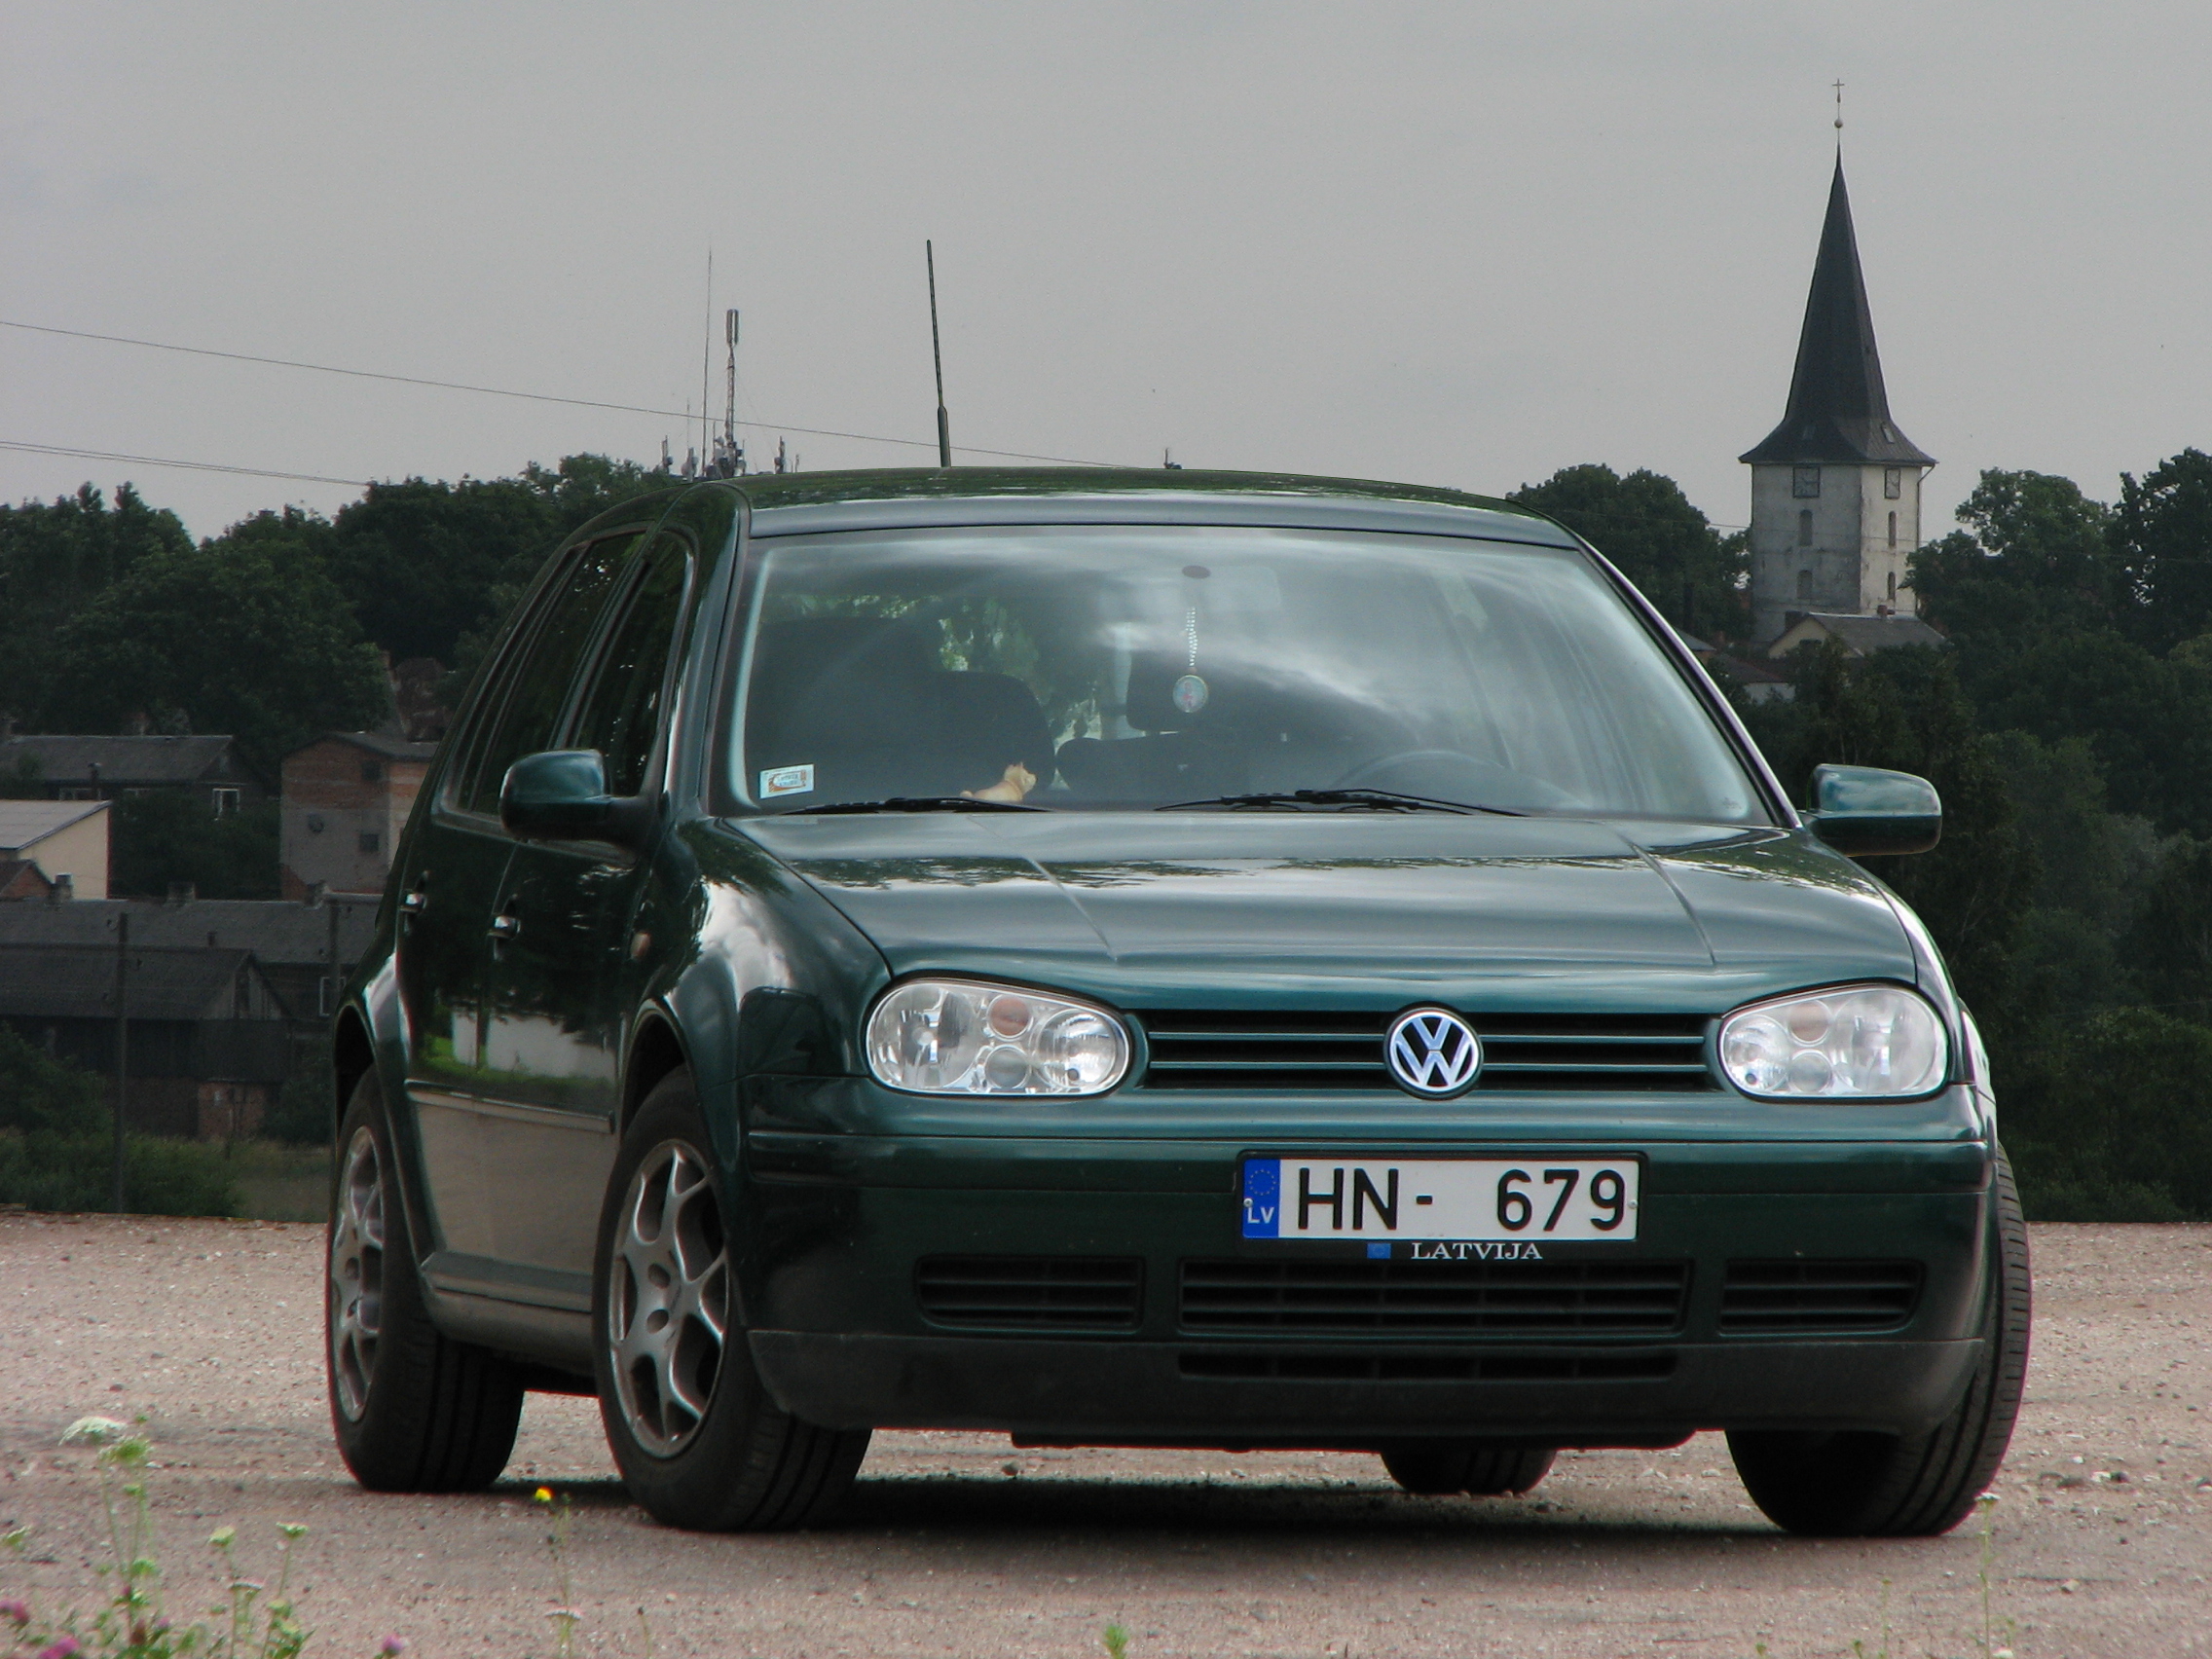 File:VW Golf IV.jpg - Wikimedia Commons